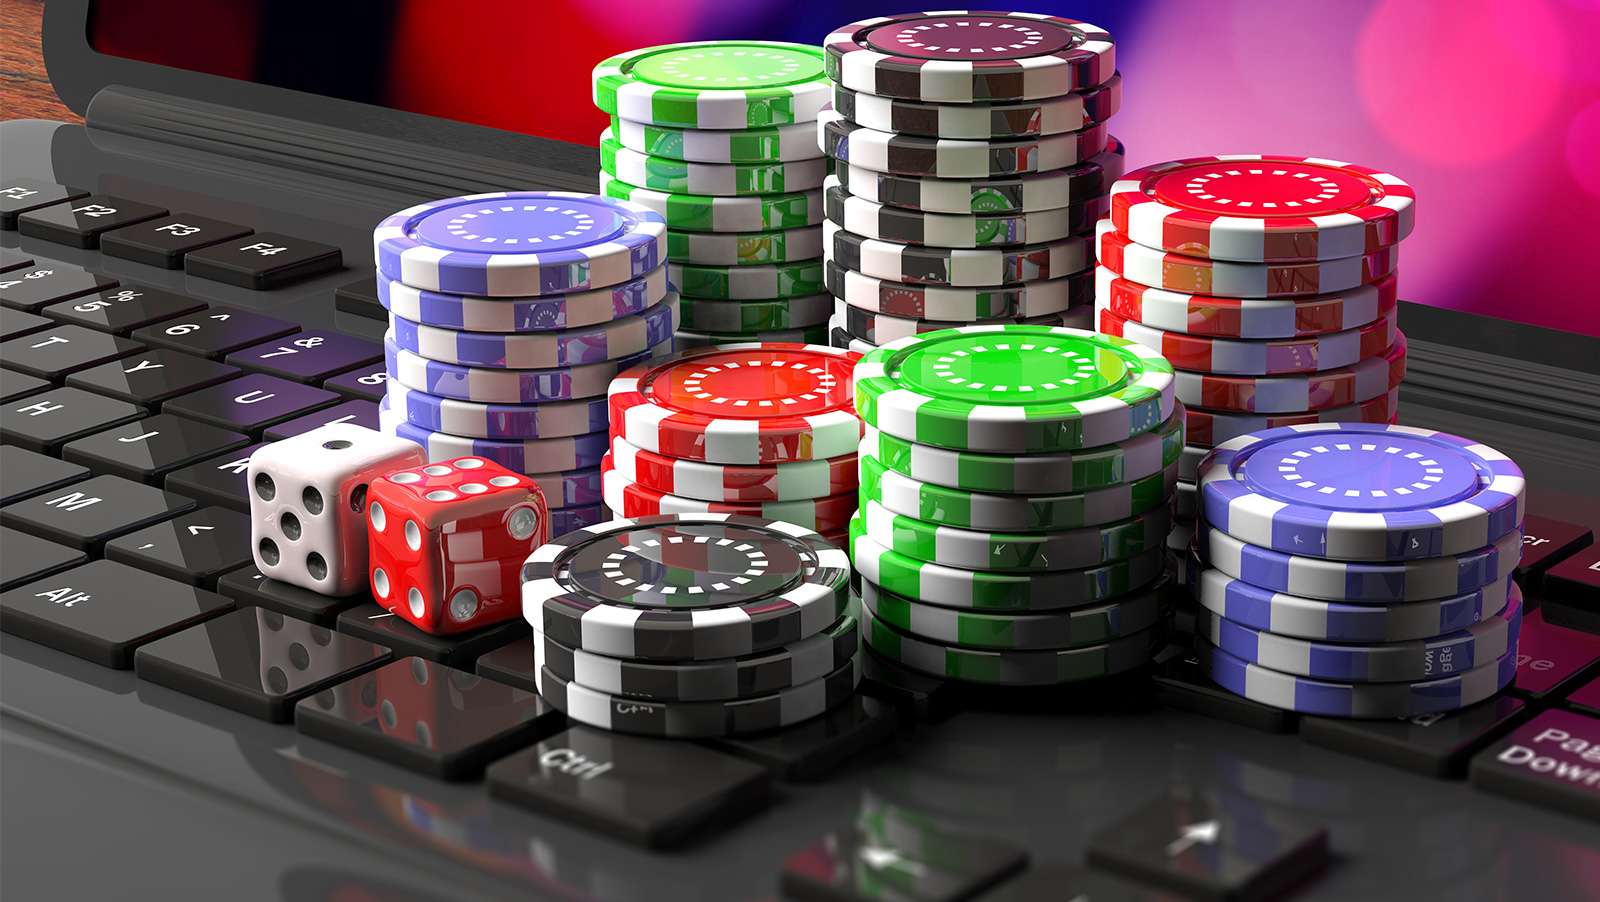 Dutch Regulator Planning a Crackdown on Illegal Gambling